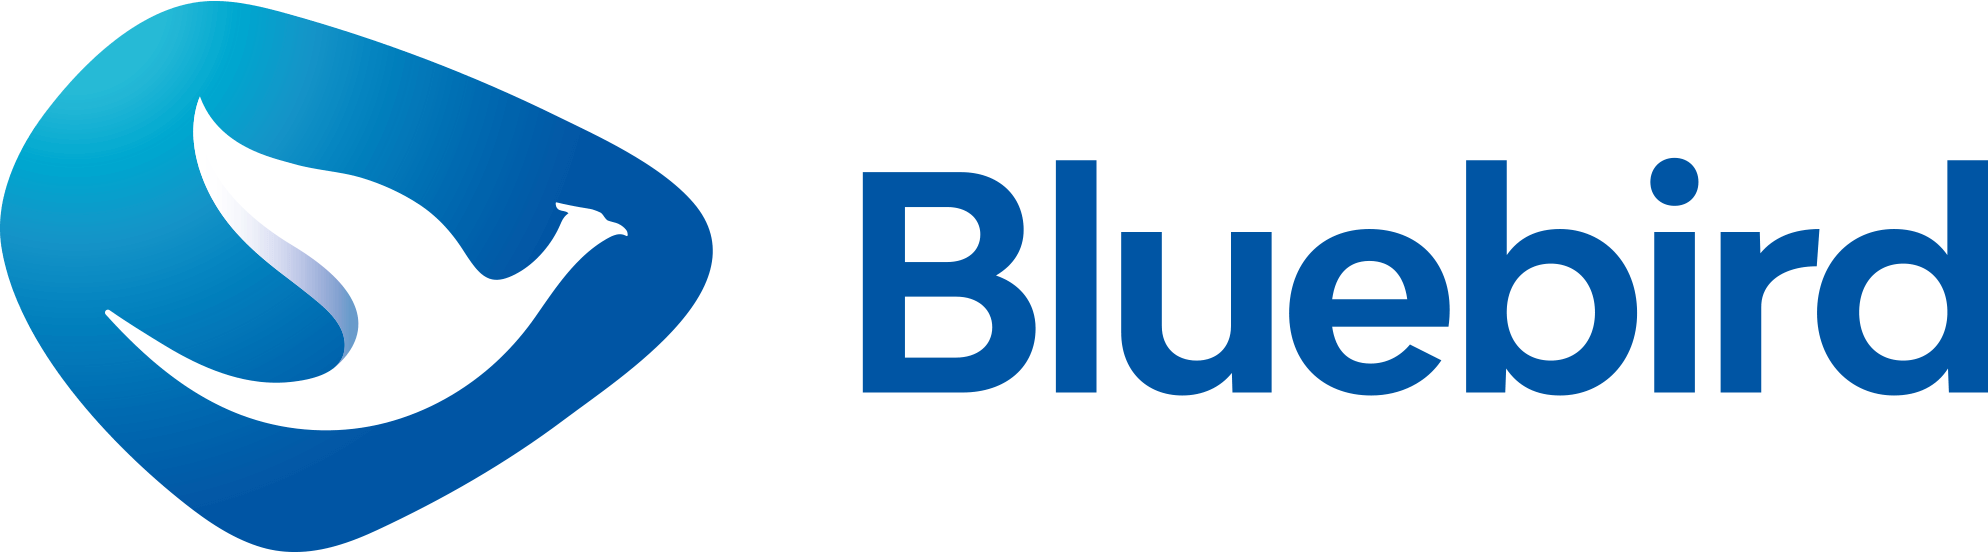 Blue Bird Brand Logo